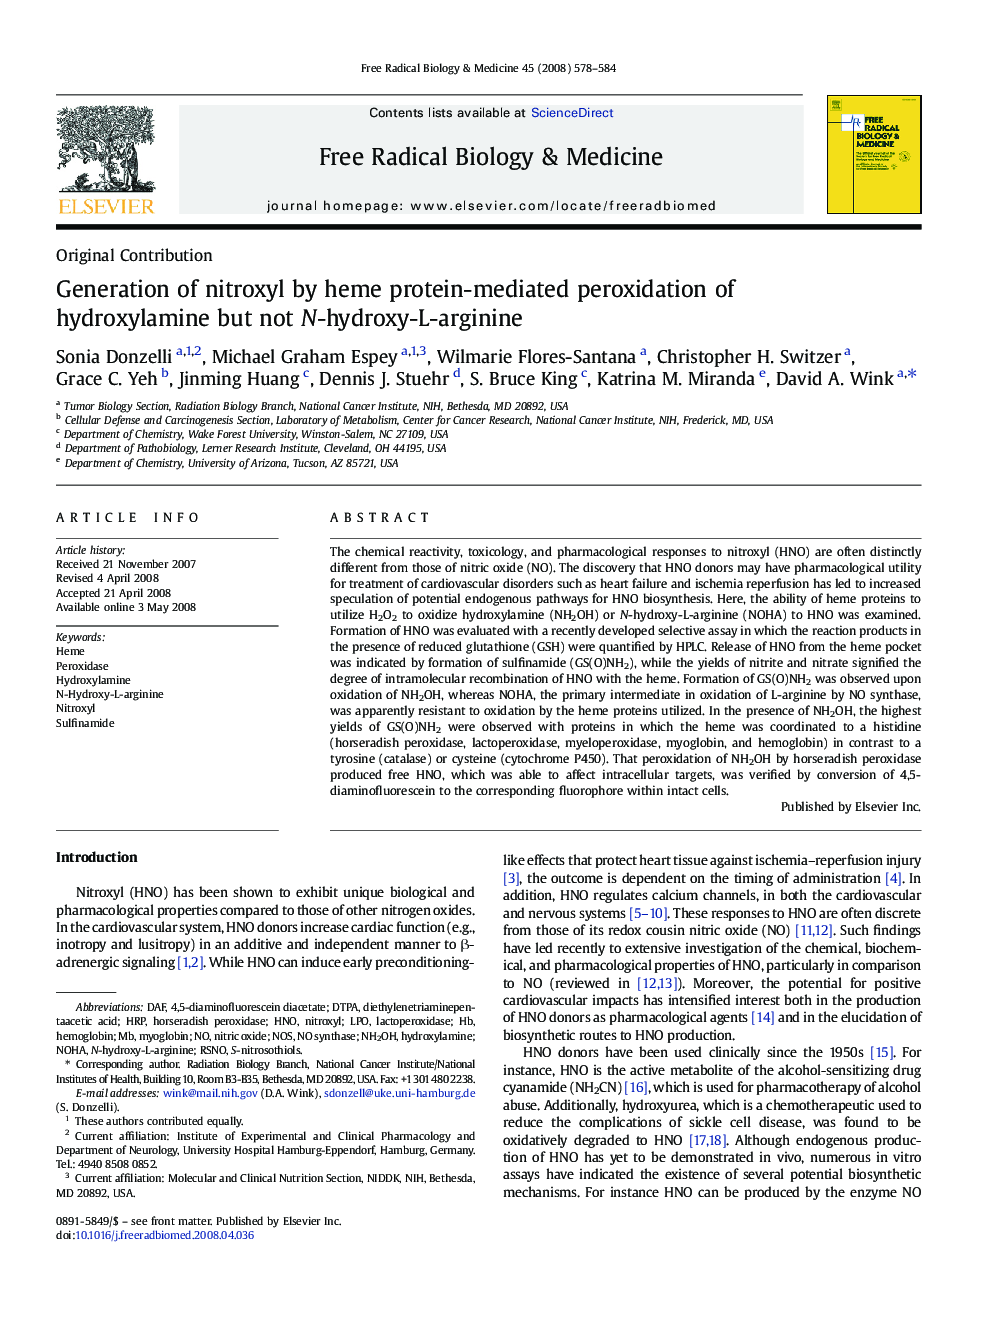 Generation of nitroxyl by heme protein-mediated peroxidation of hydroxylamine but not N-hydroxy-L-arginine